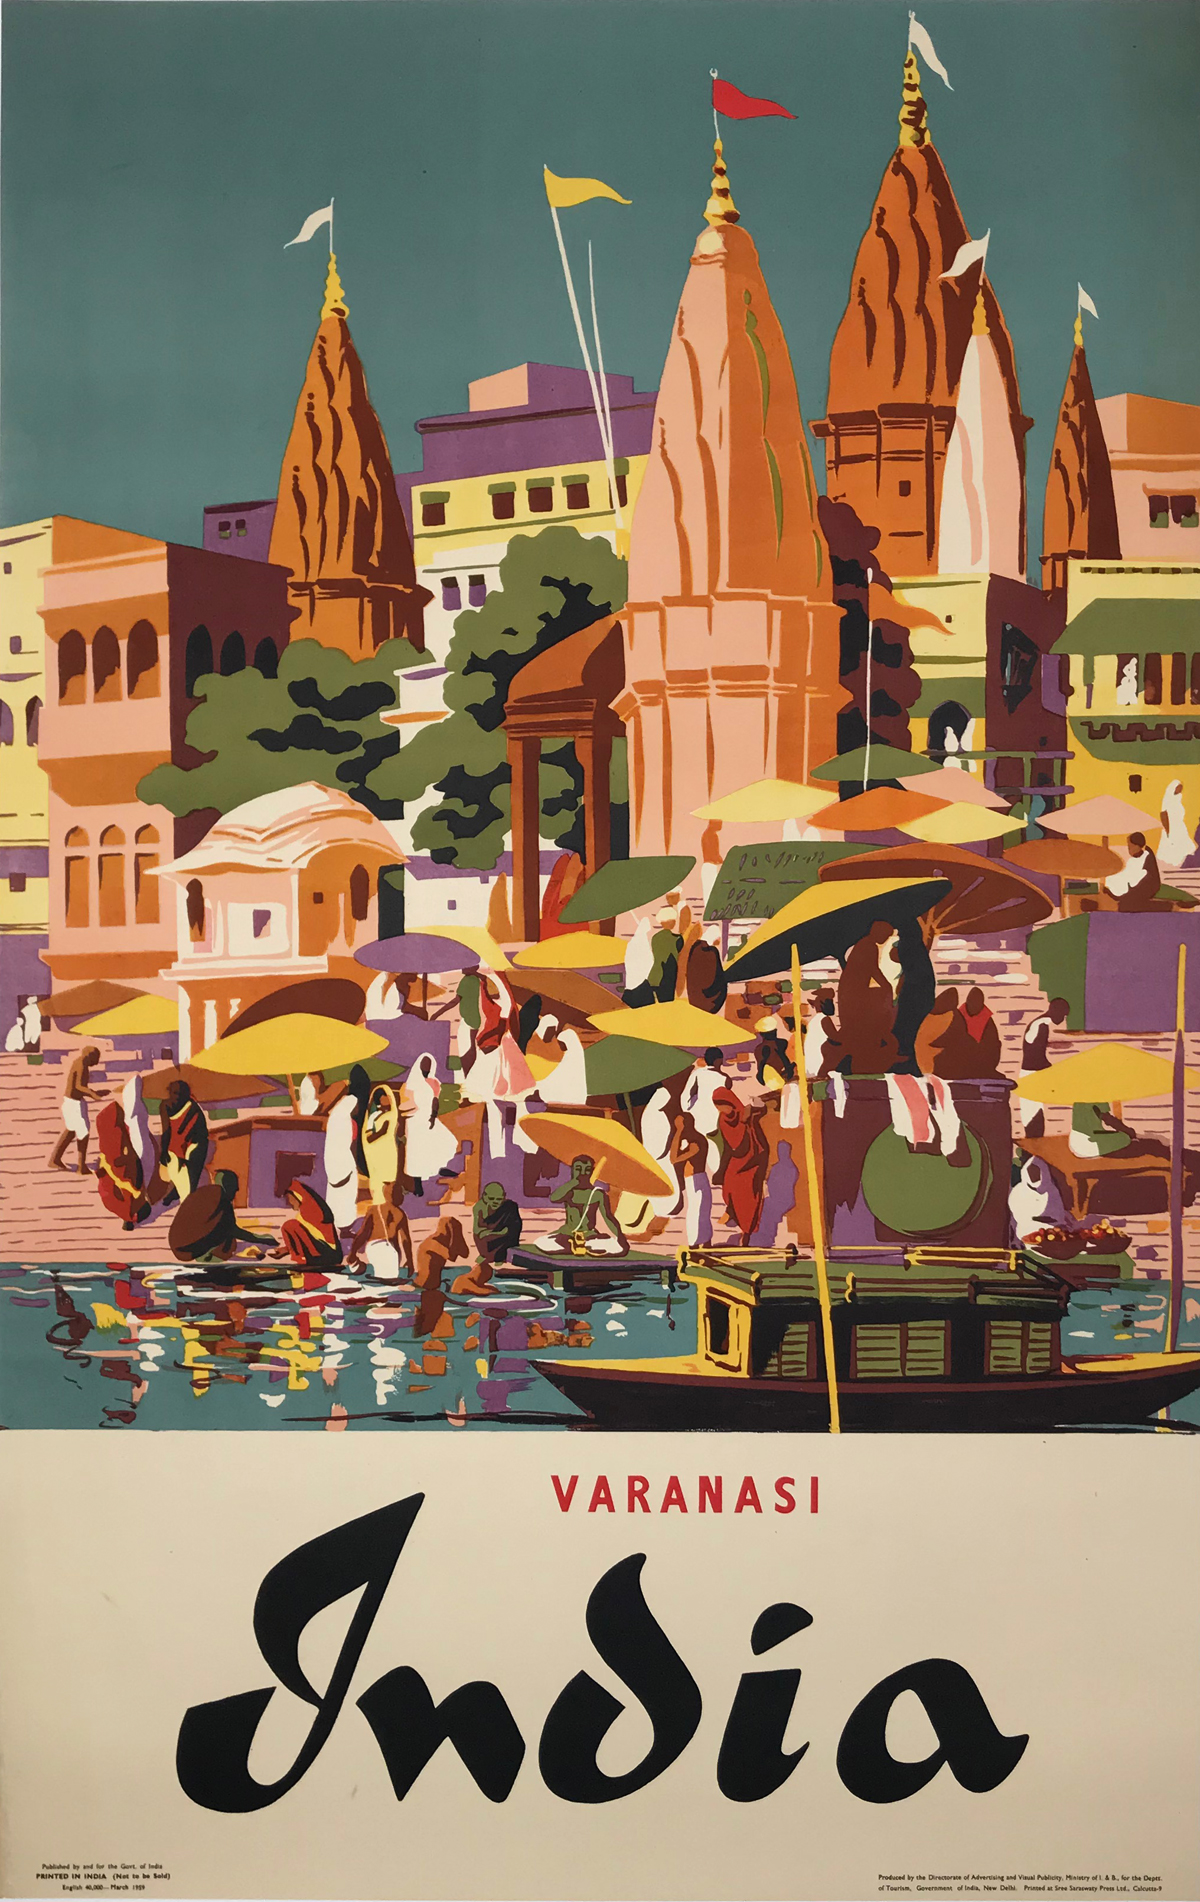  India Varanasi (Banaras) Original 1959 Vintage Travel Advertisement Poster by Sree Saraswaty Ltd. Linen Backed. Indian advertisement for a great tourism destination.